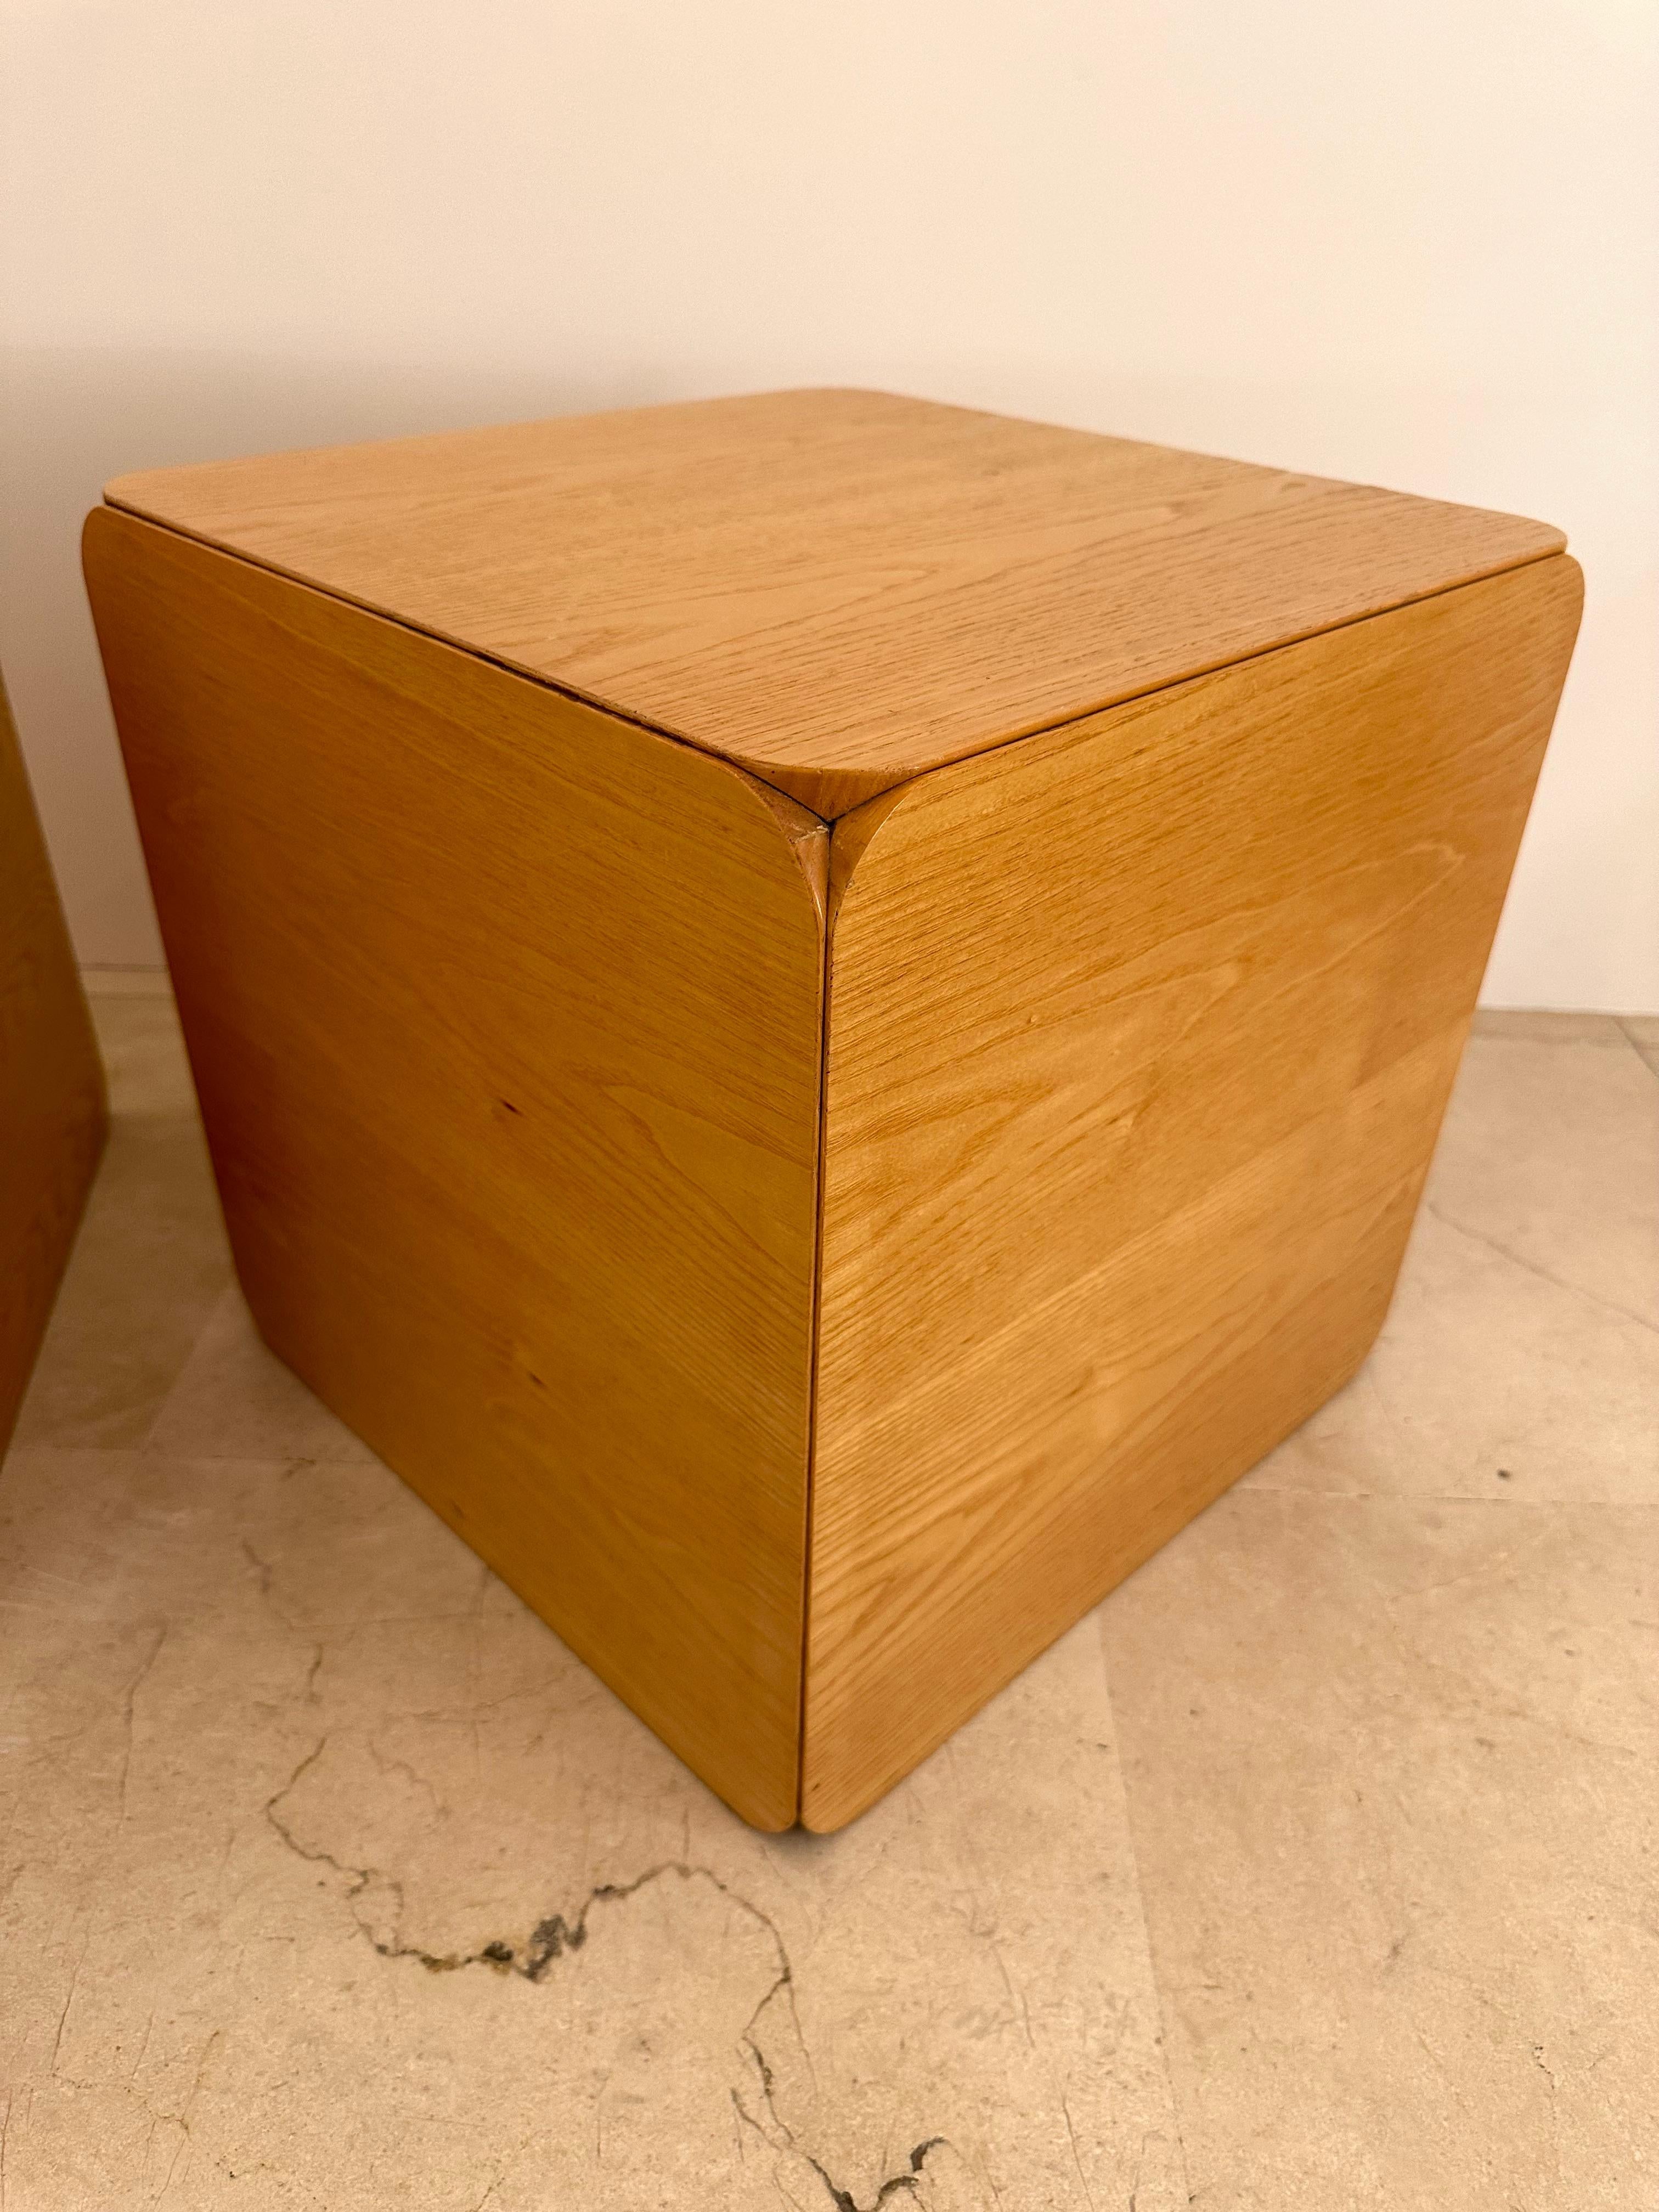 Wood Cube Stool Samara by Derk Jan de Vries for Maisa di Seveso. Italy, 1970s For Sale 6